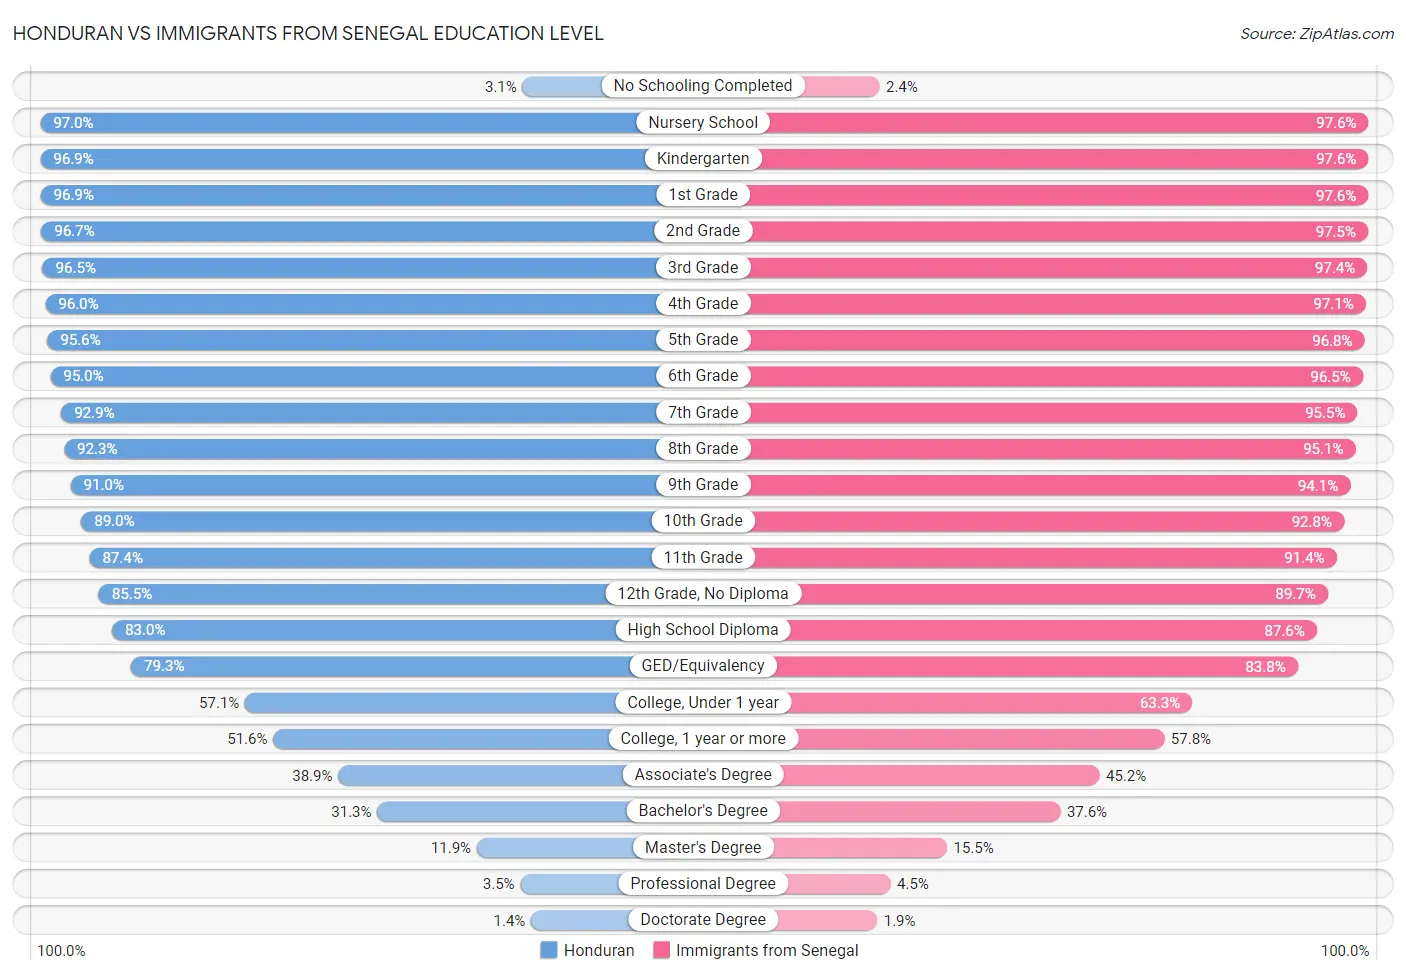 Honduran vs Immigrants from Senegal Education Level